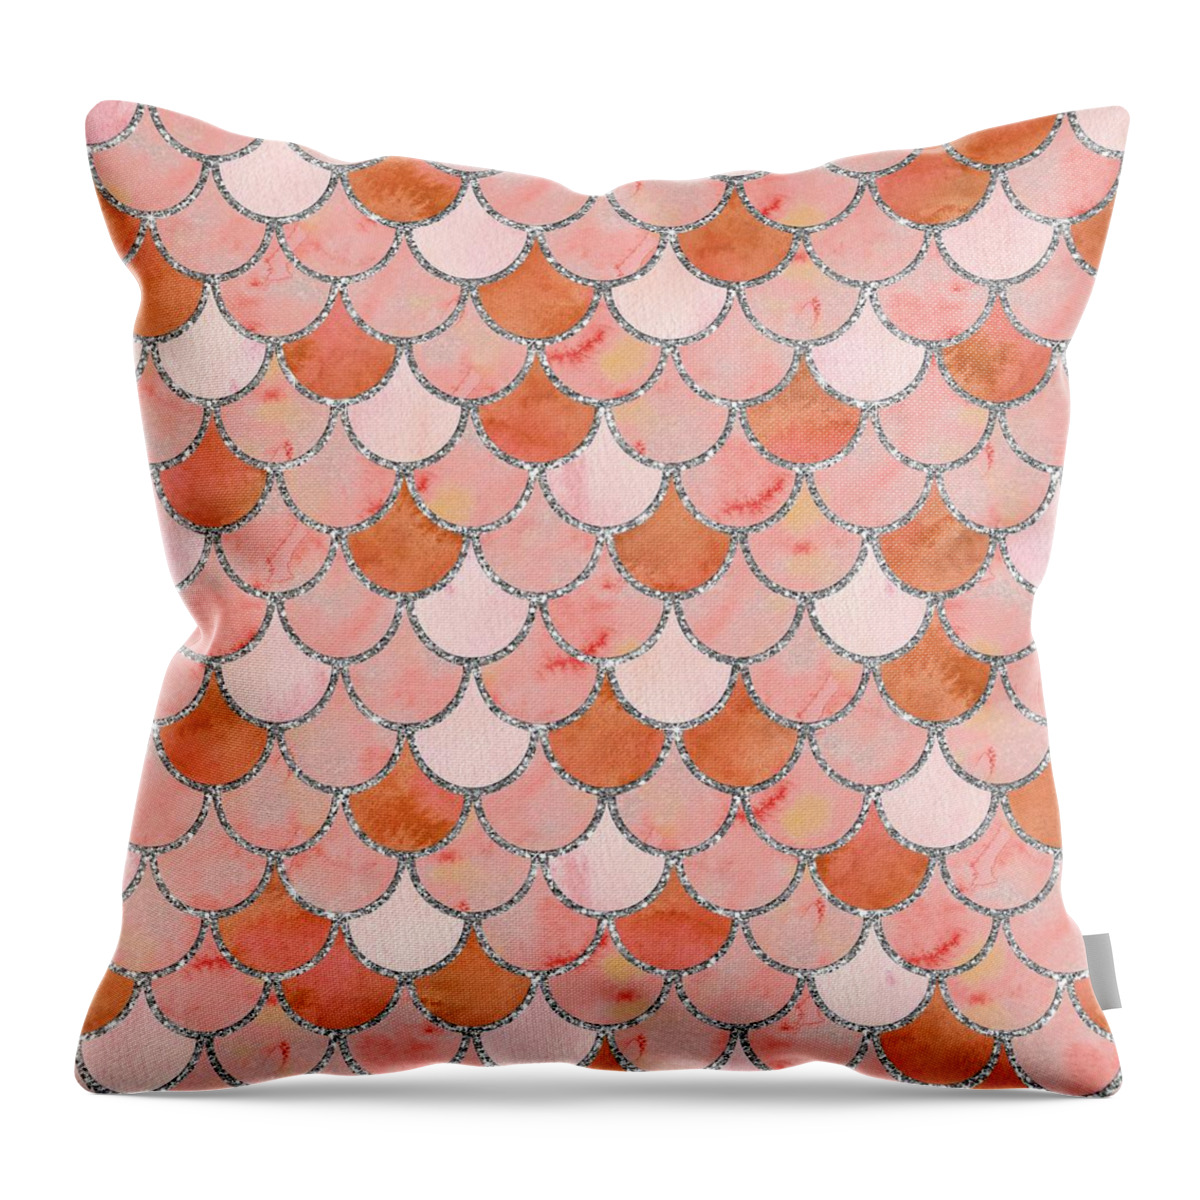 Mermaid Throw Pillow featuring the digital art Pink Orange Mermaid Scales by Sambel Pedes